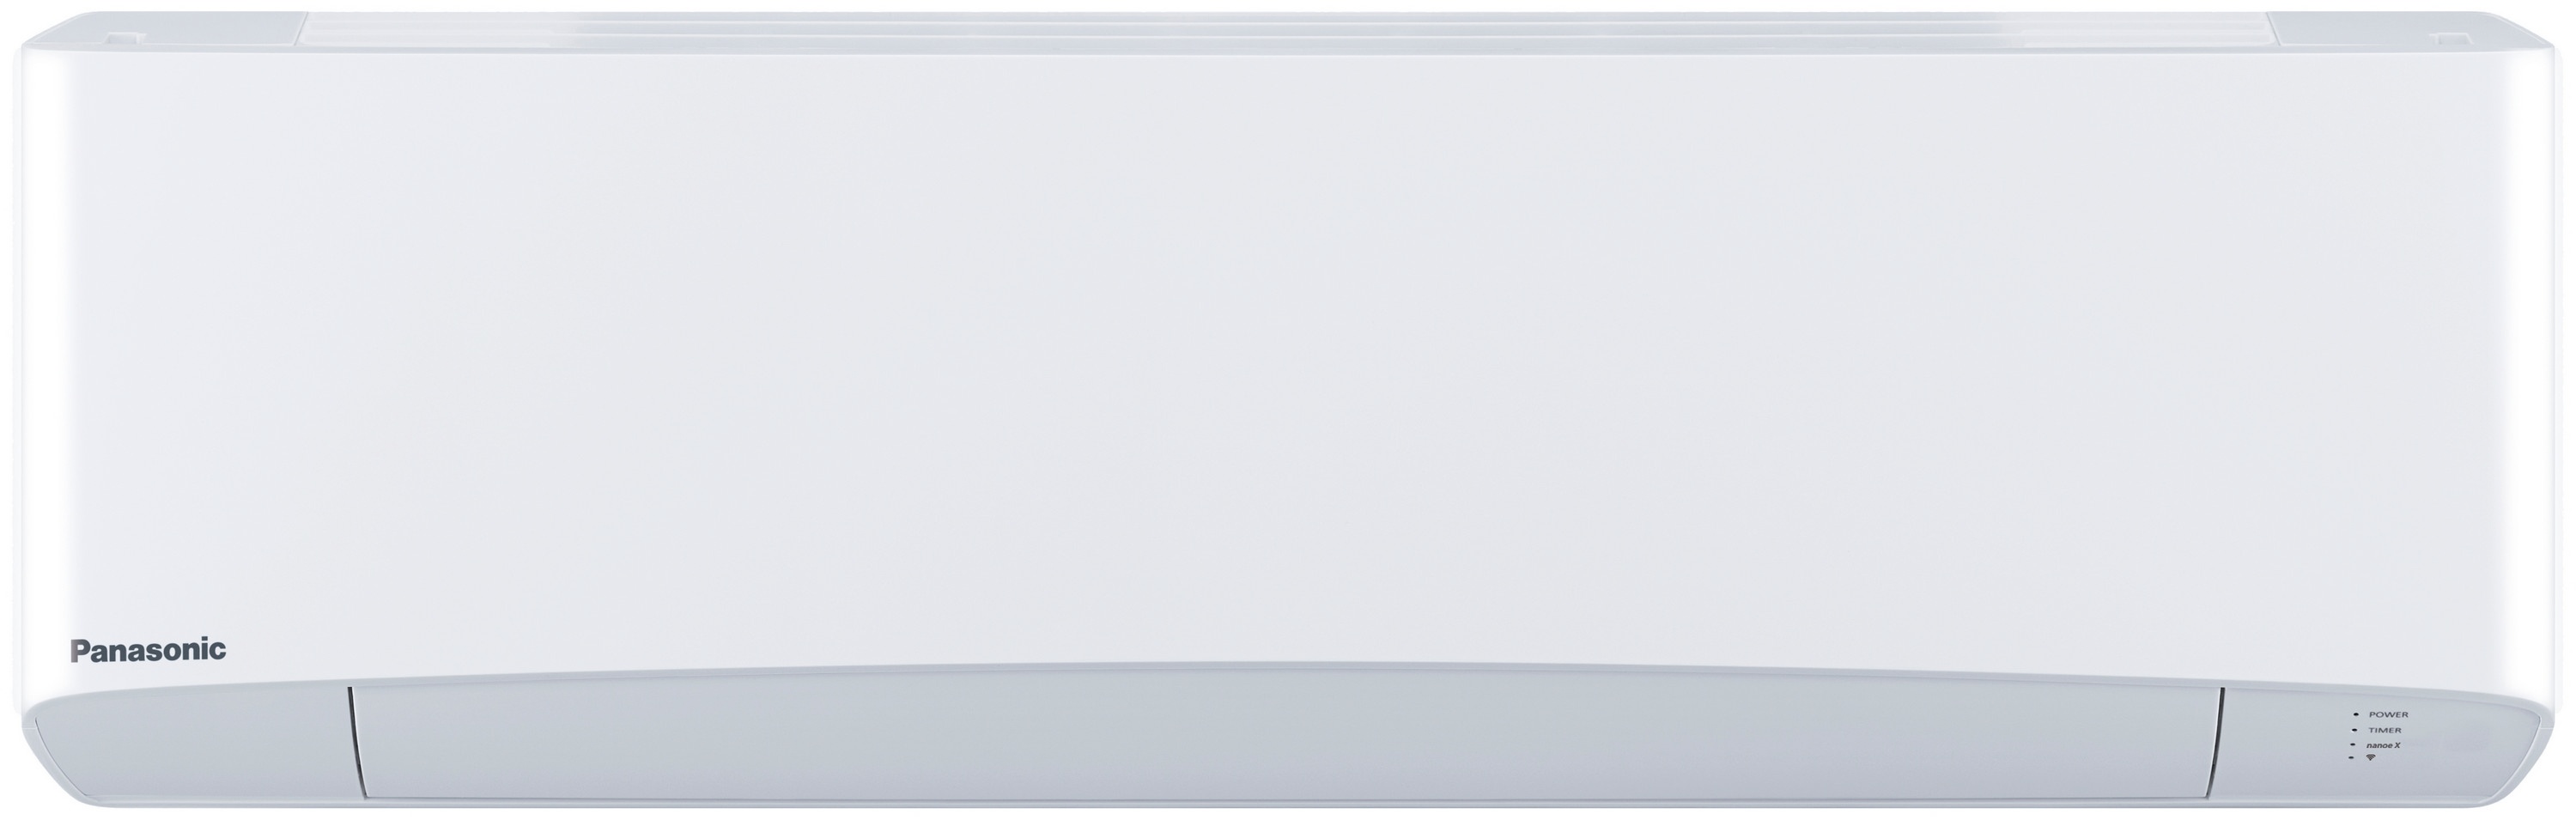 Кондиционер сплит-система Panasonic Flagship White CS/CU-Z50TKEW цена 74999.00 грн - фотография 2